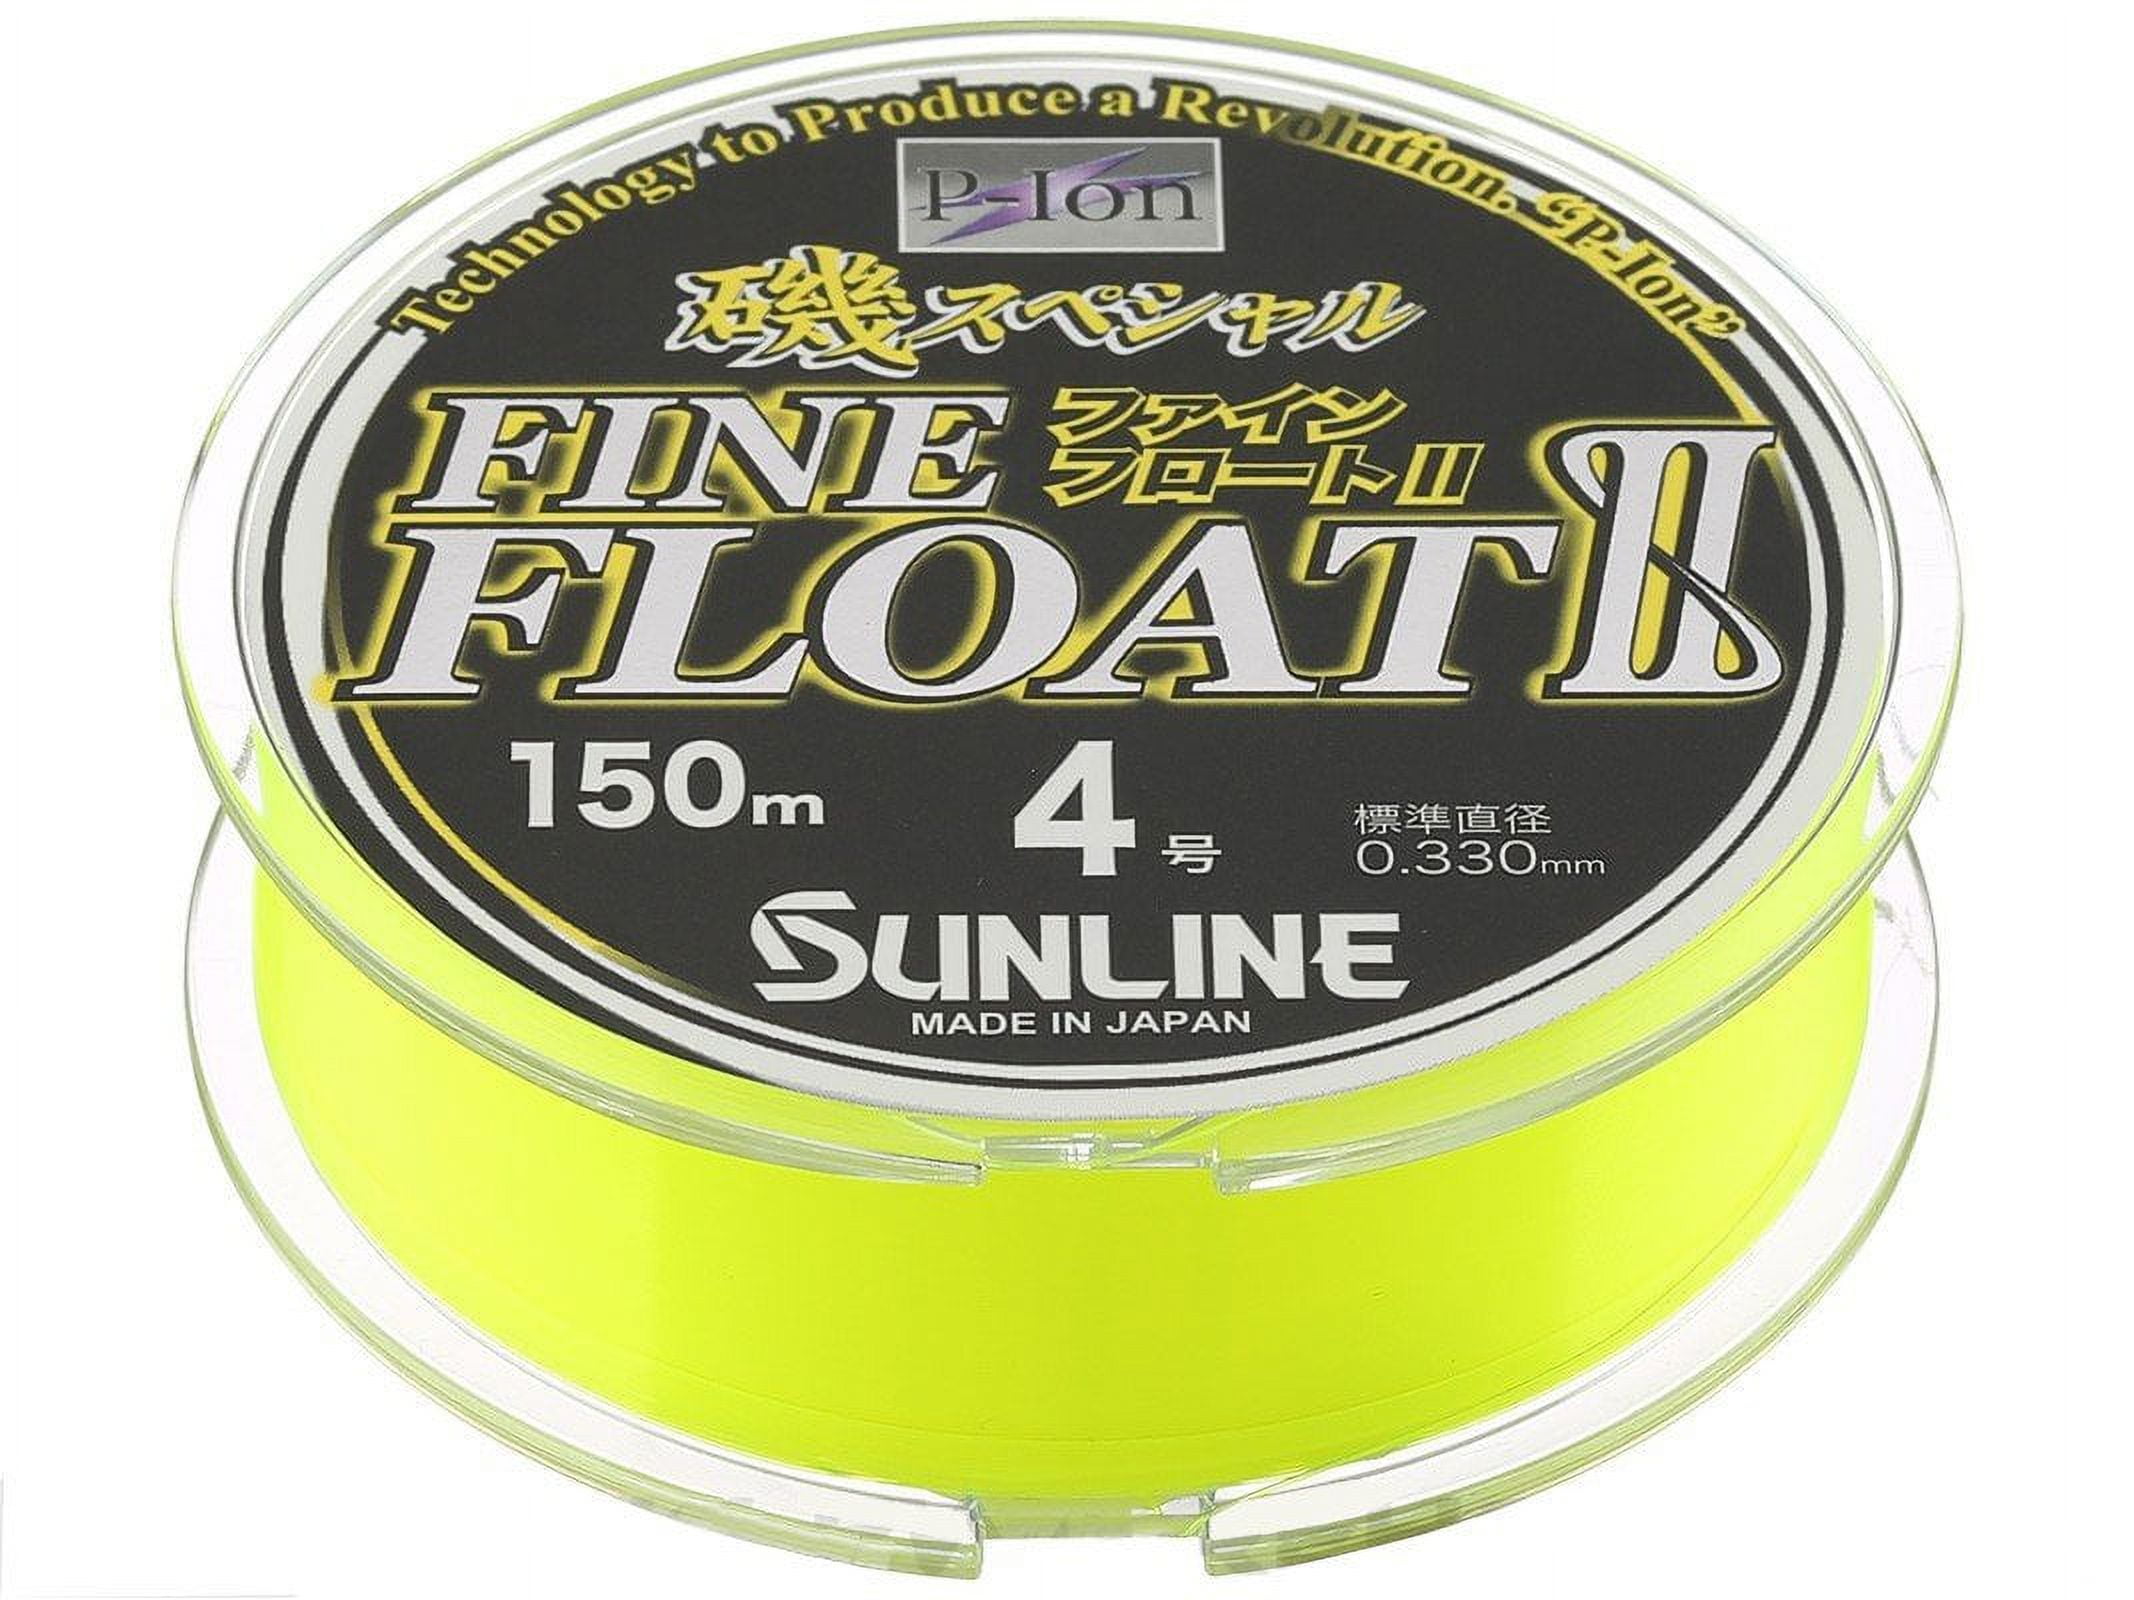 Sunline Siglon Fine Float II P-ion Vivid Yellow Monofilament 165 Yards 